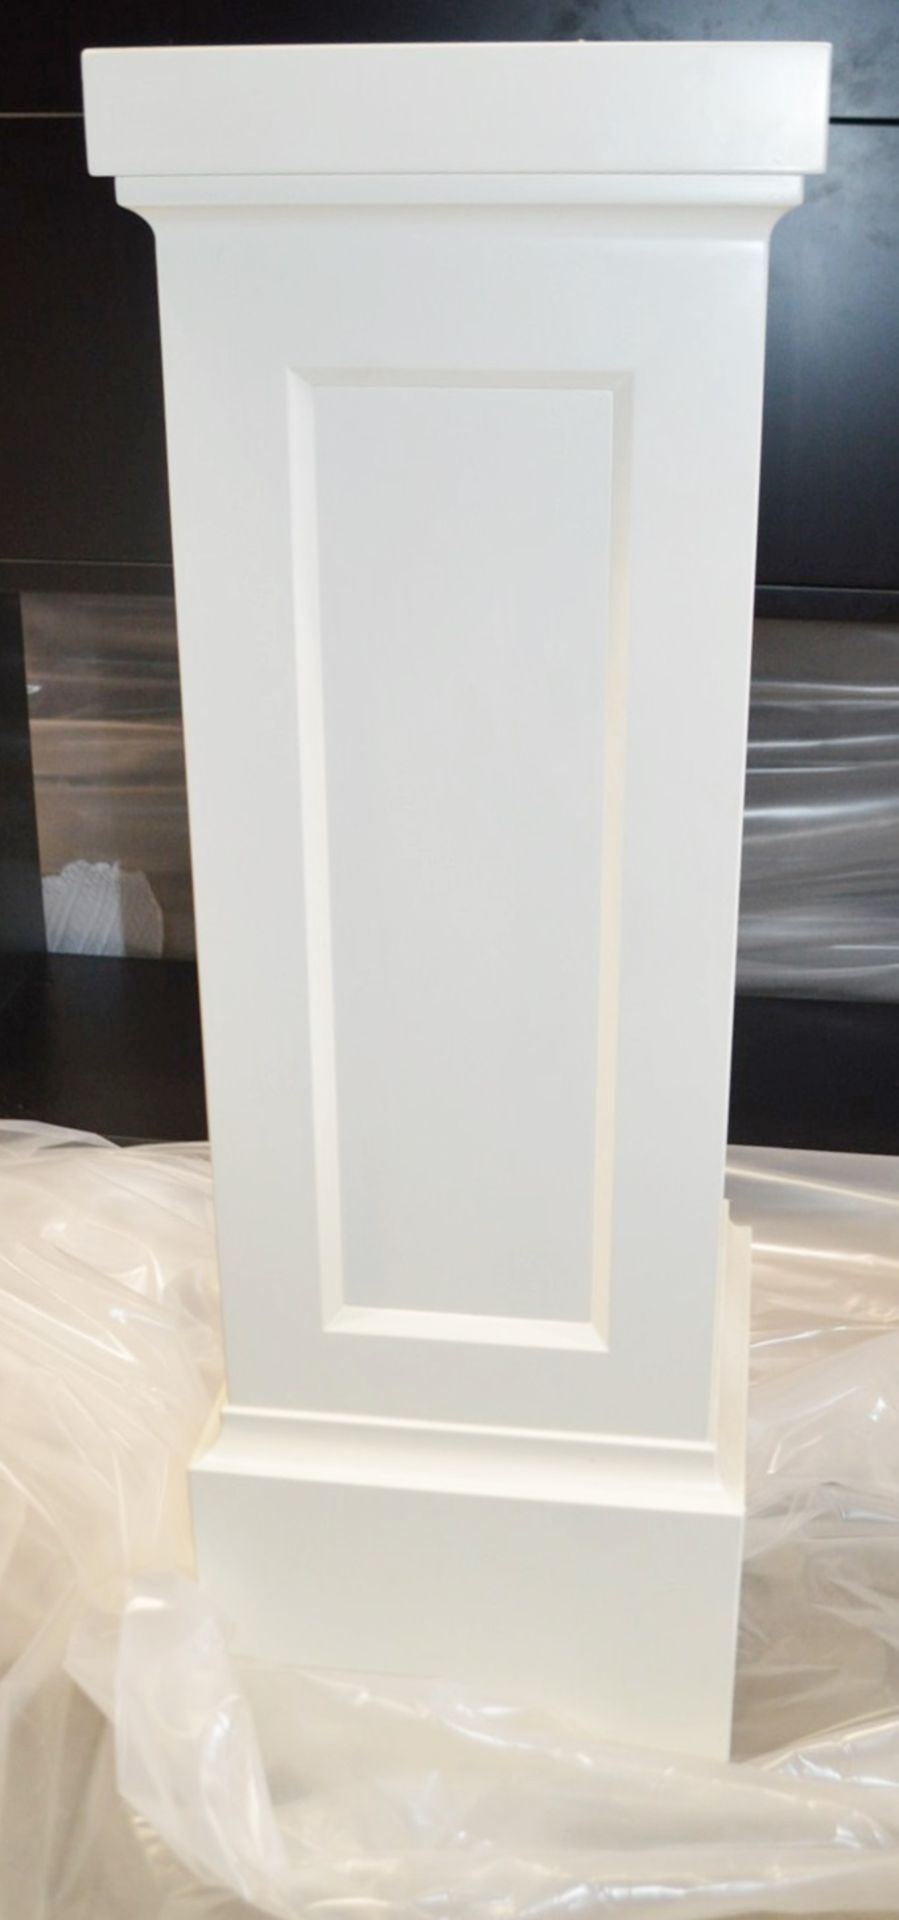 1 x JUSTIN VAN BREDA Legacy Pedestal / Display Stand - W30 x D30 x H90cm - Original Price £1,459 - Image 2 of 6